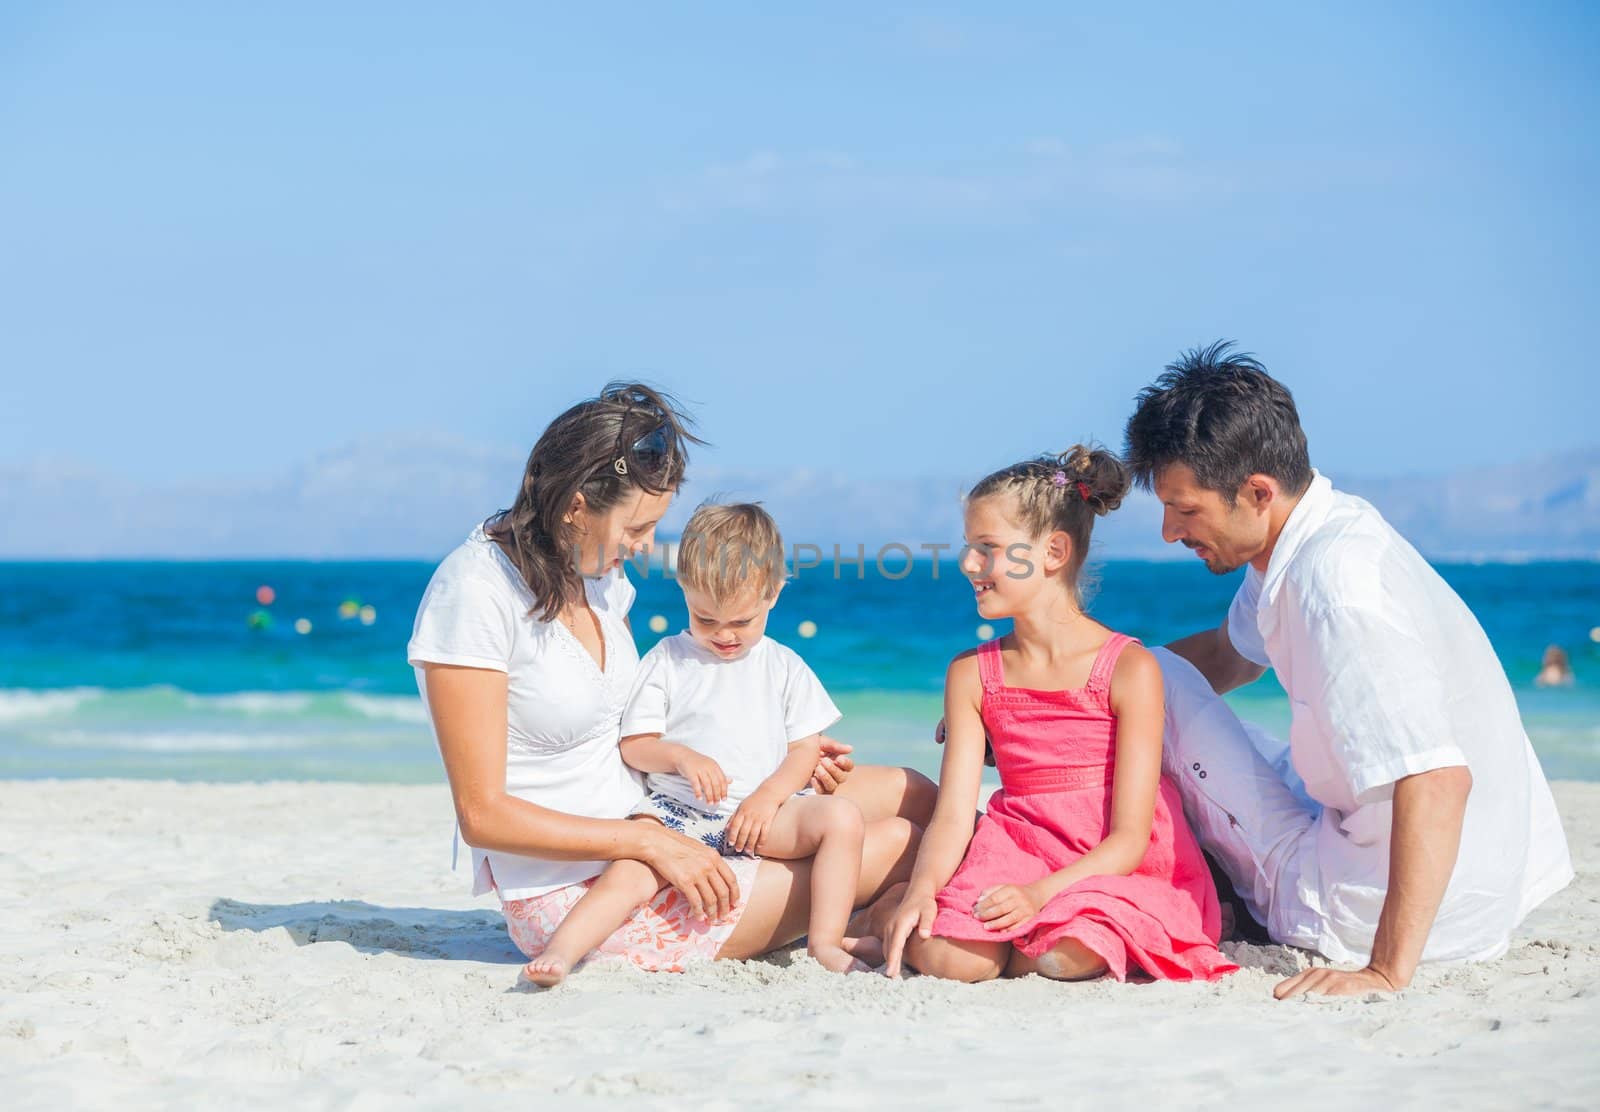 Family of four having fun on tropical beach